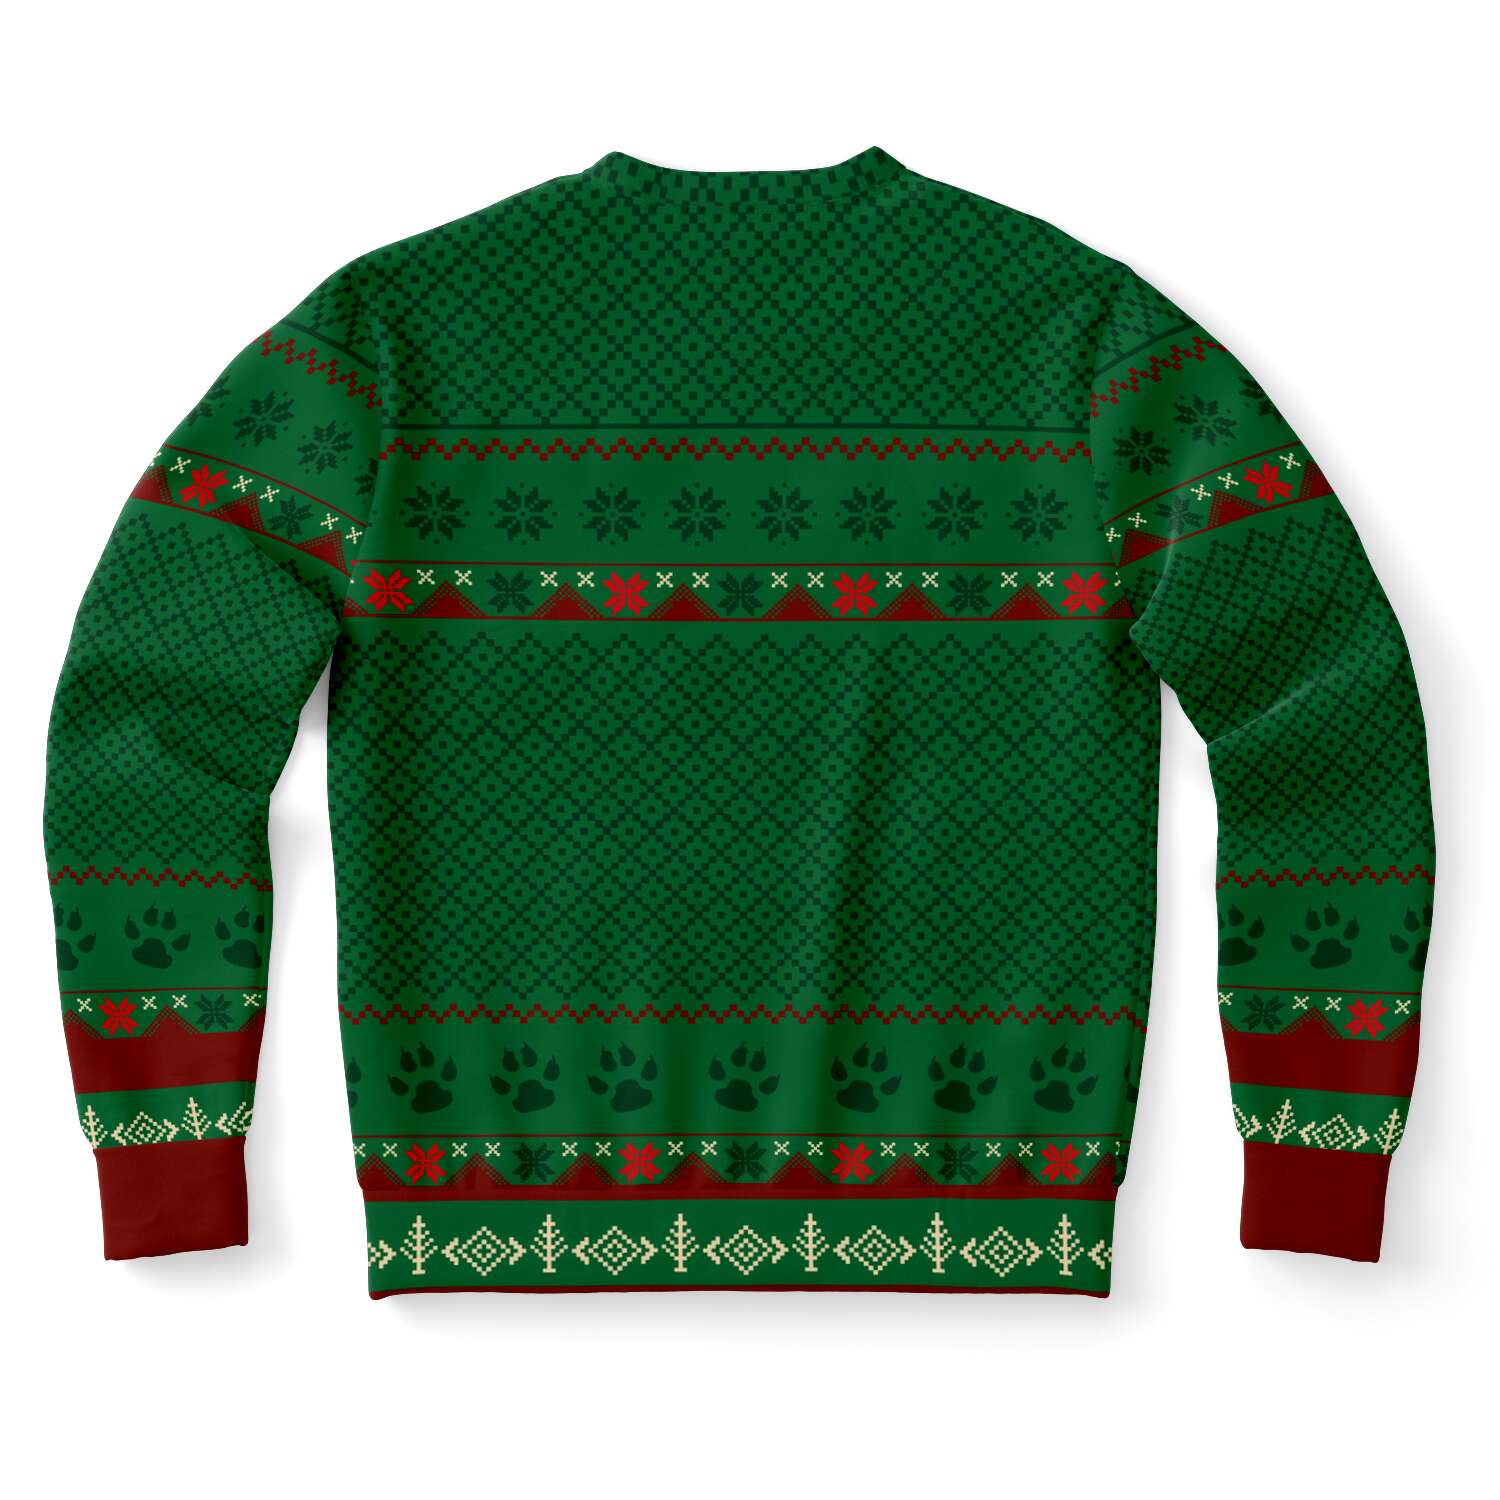 Feliz Navidog - Labrador - Funny Lab Dog Lover Ugly Christmas Sweater (Sweatshirt)